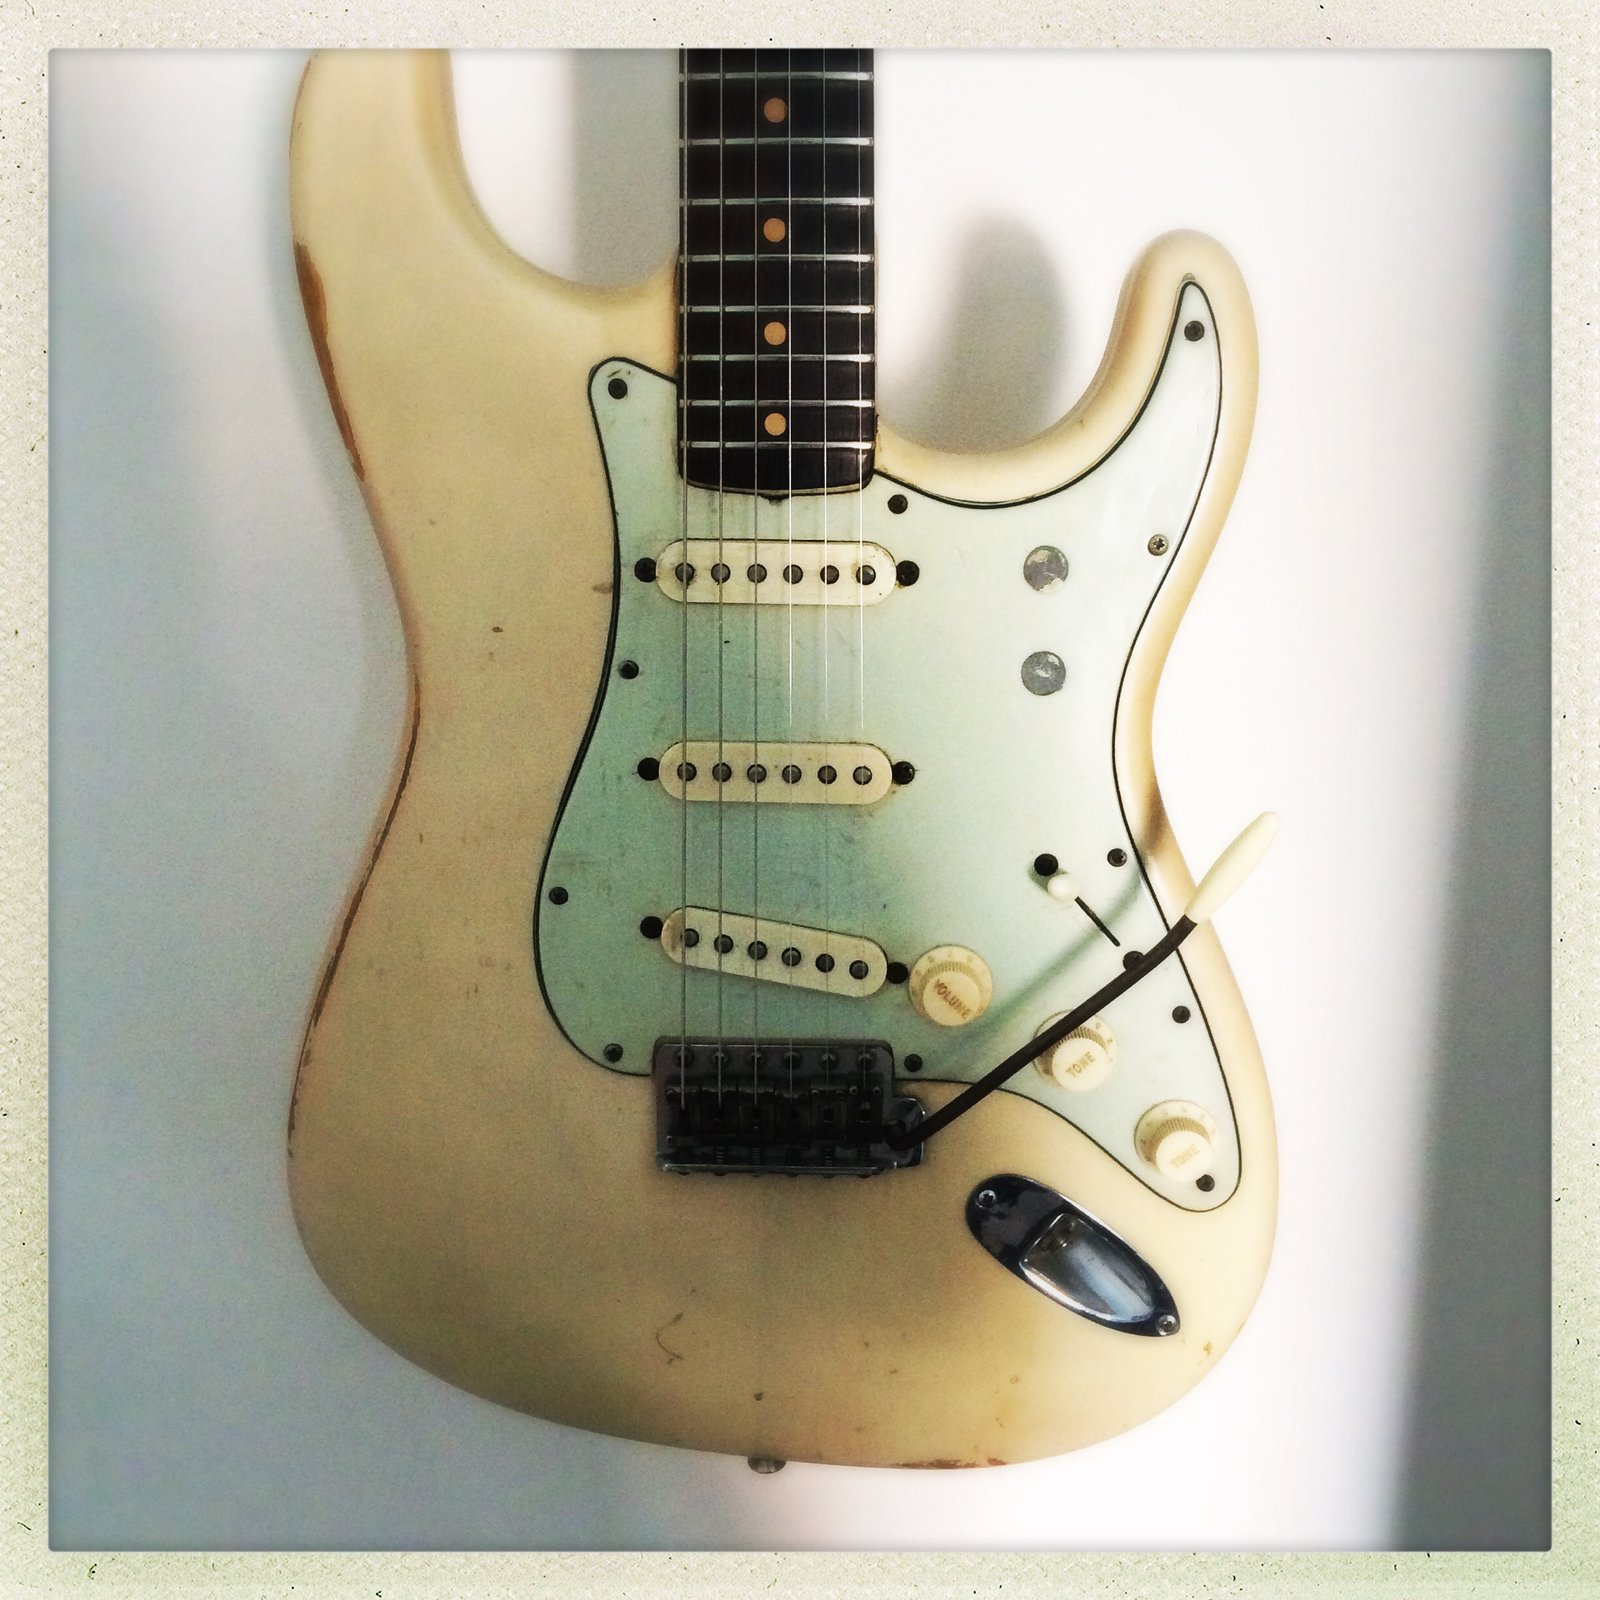 Fender Stratocaster 1961 | Average Guitar Player